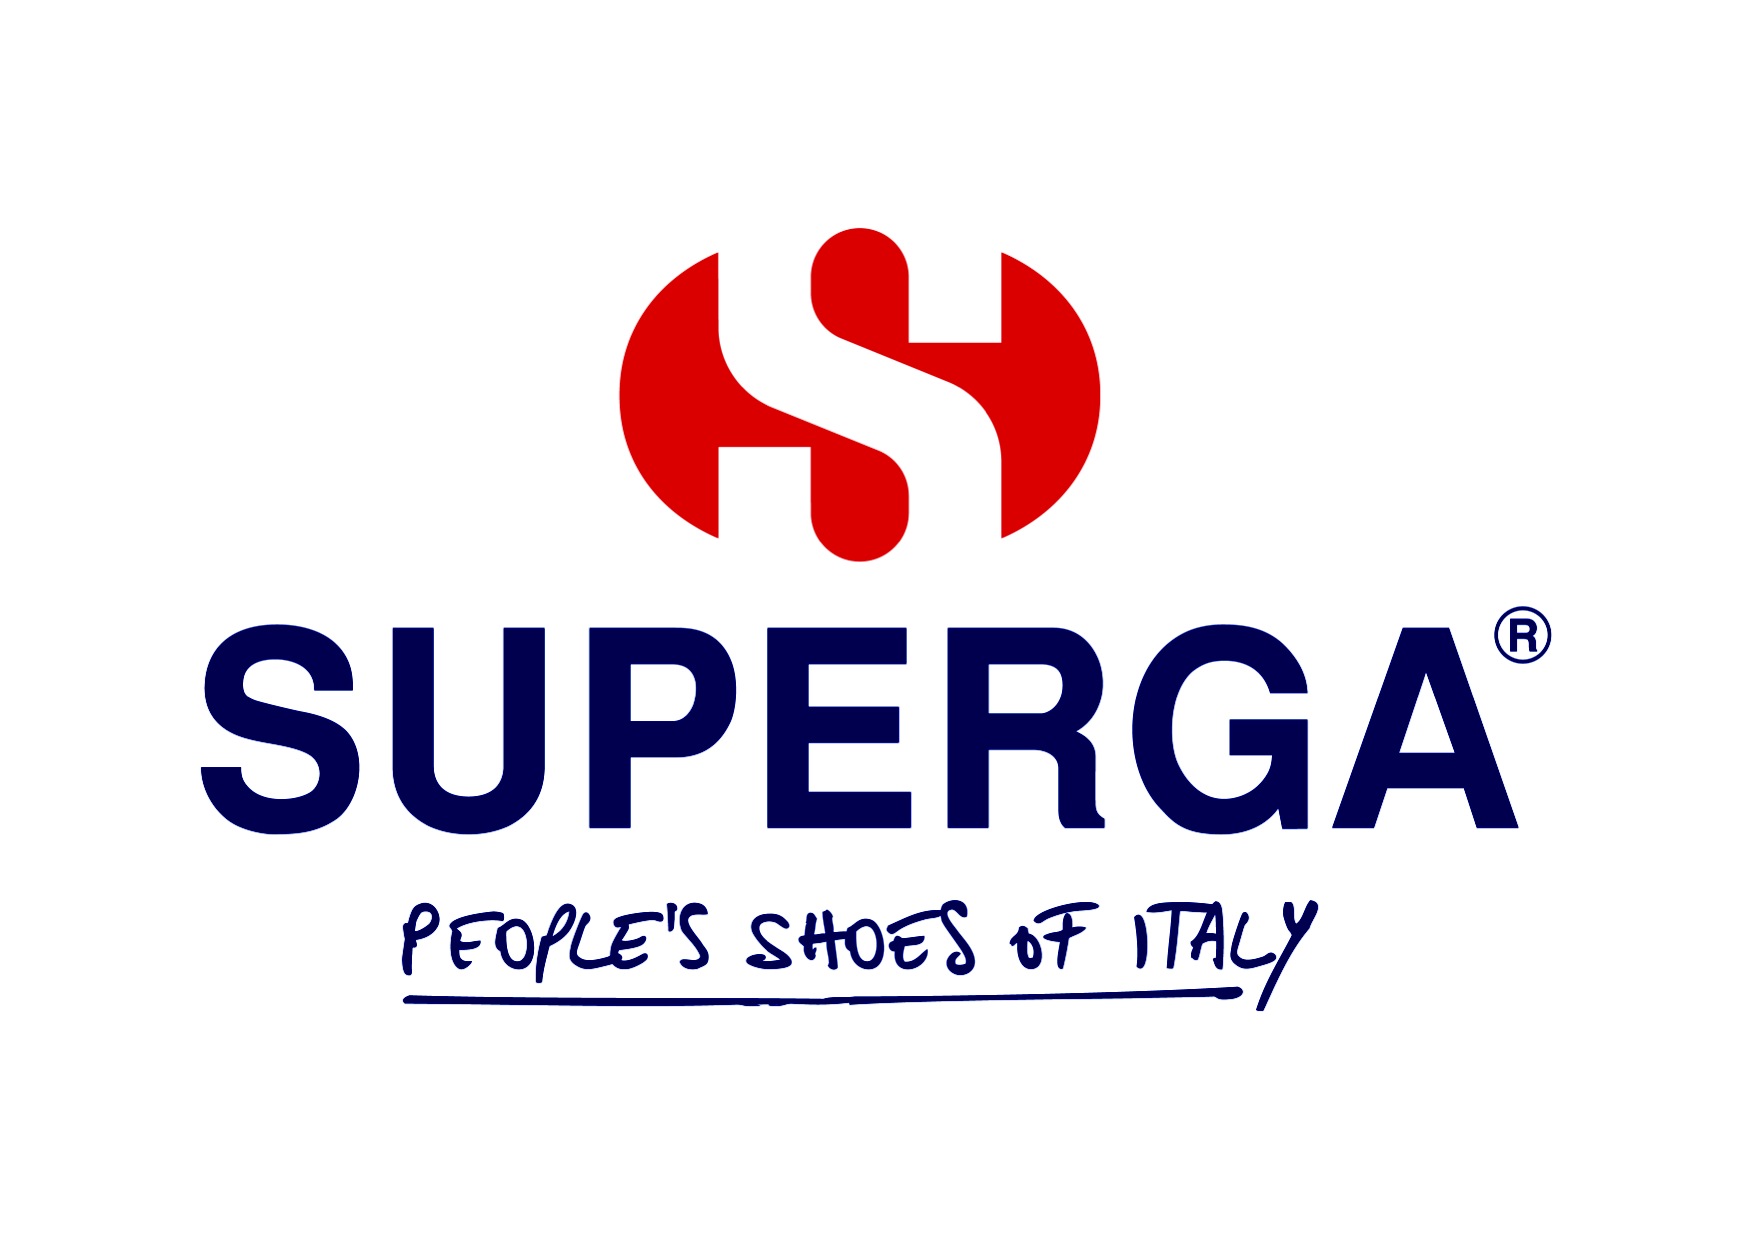 Superga footwear